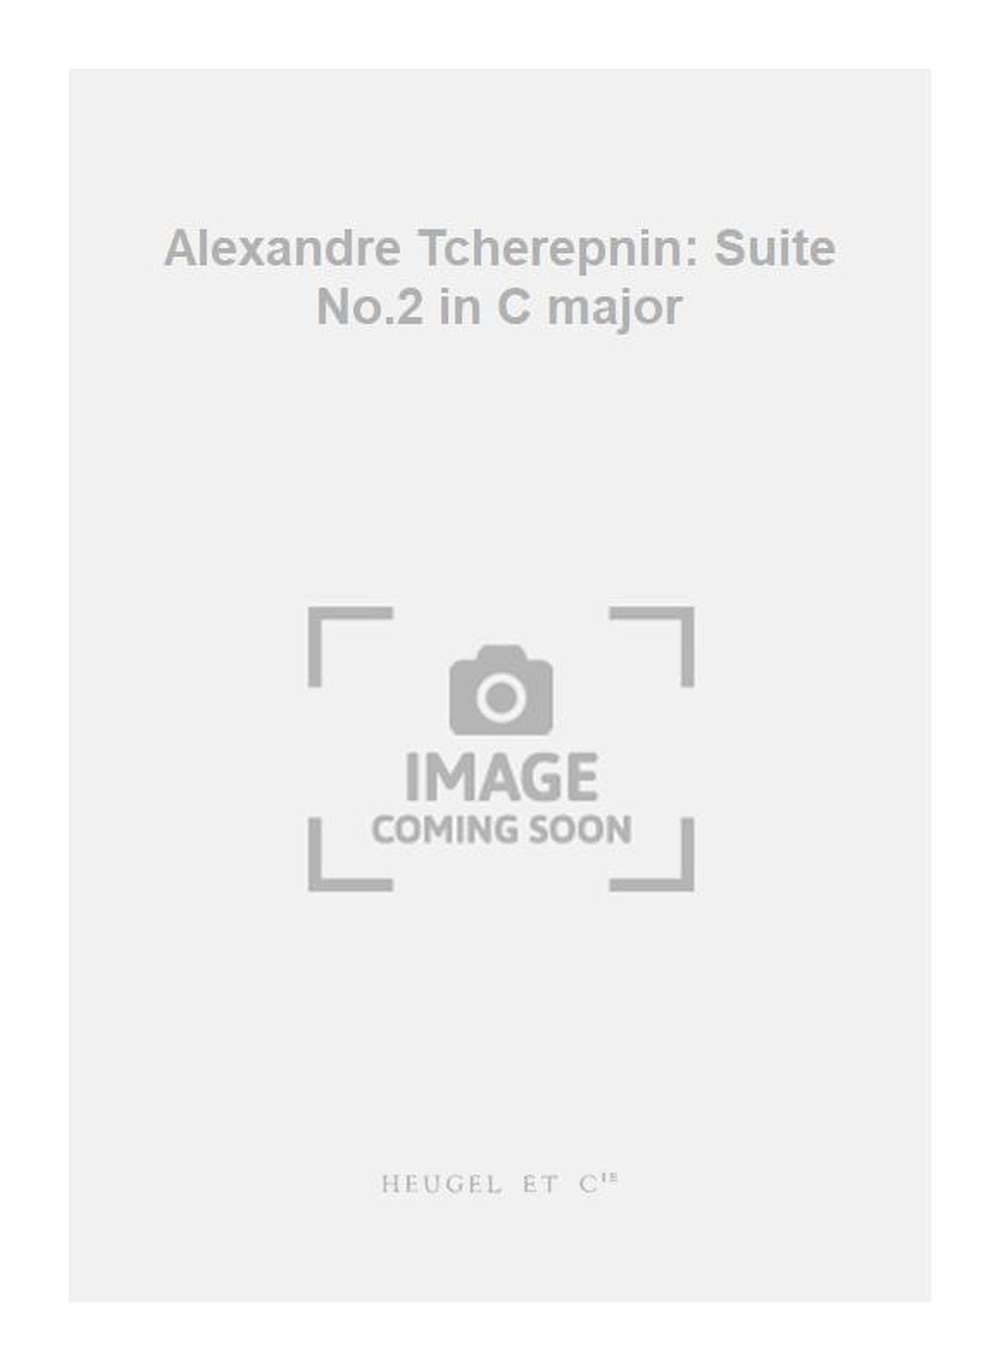 Alexander Tcherepnin: Alexandre Tcherepnin: Suite No.2 in C major